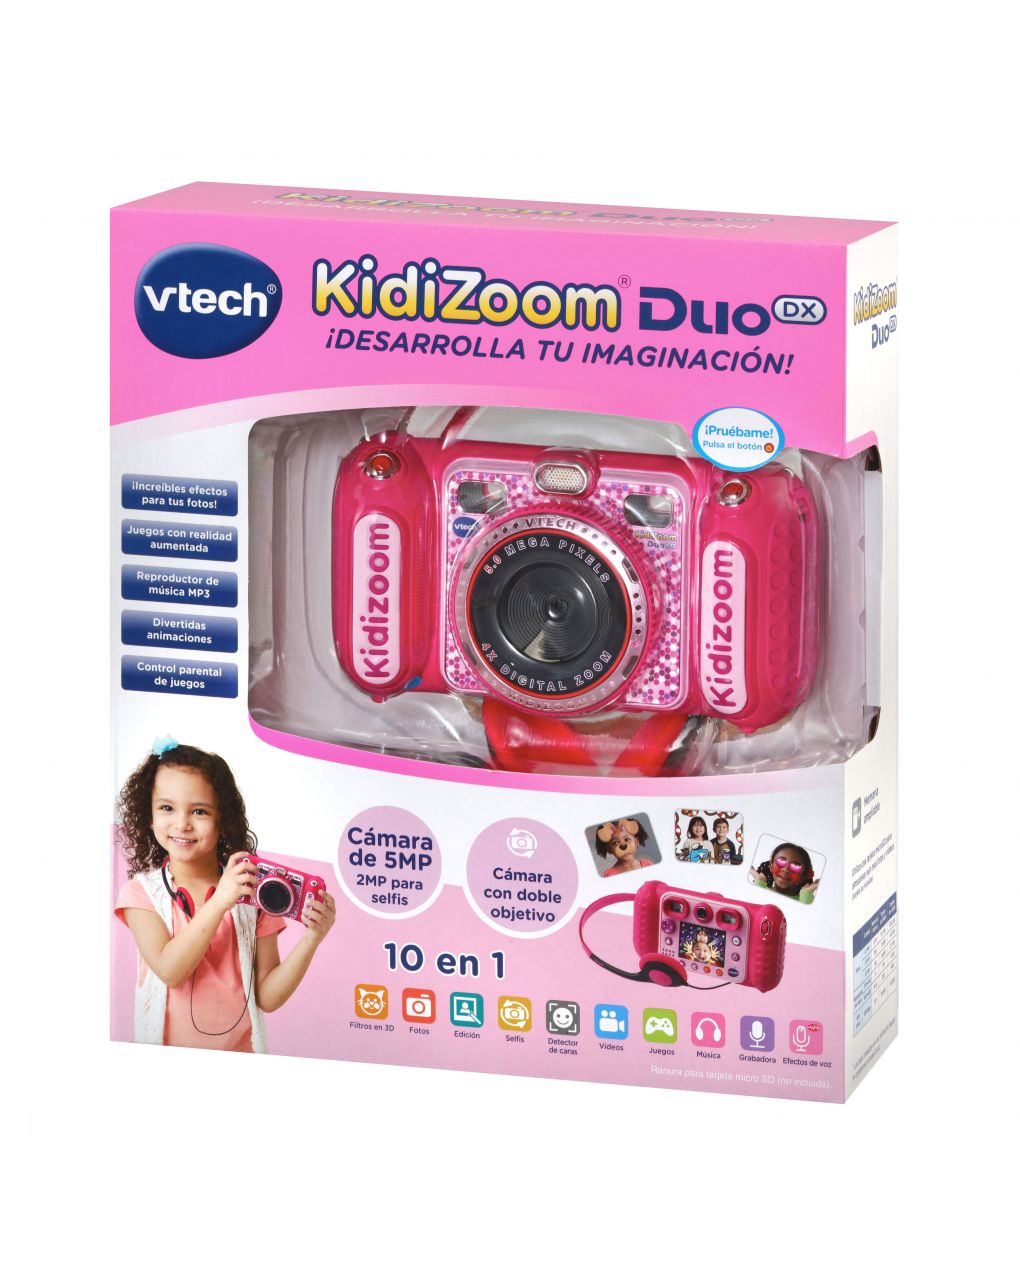 Kidizoom duo dx 10 en 1 rosa 3-12 años - vtech - Vtech